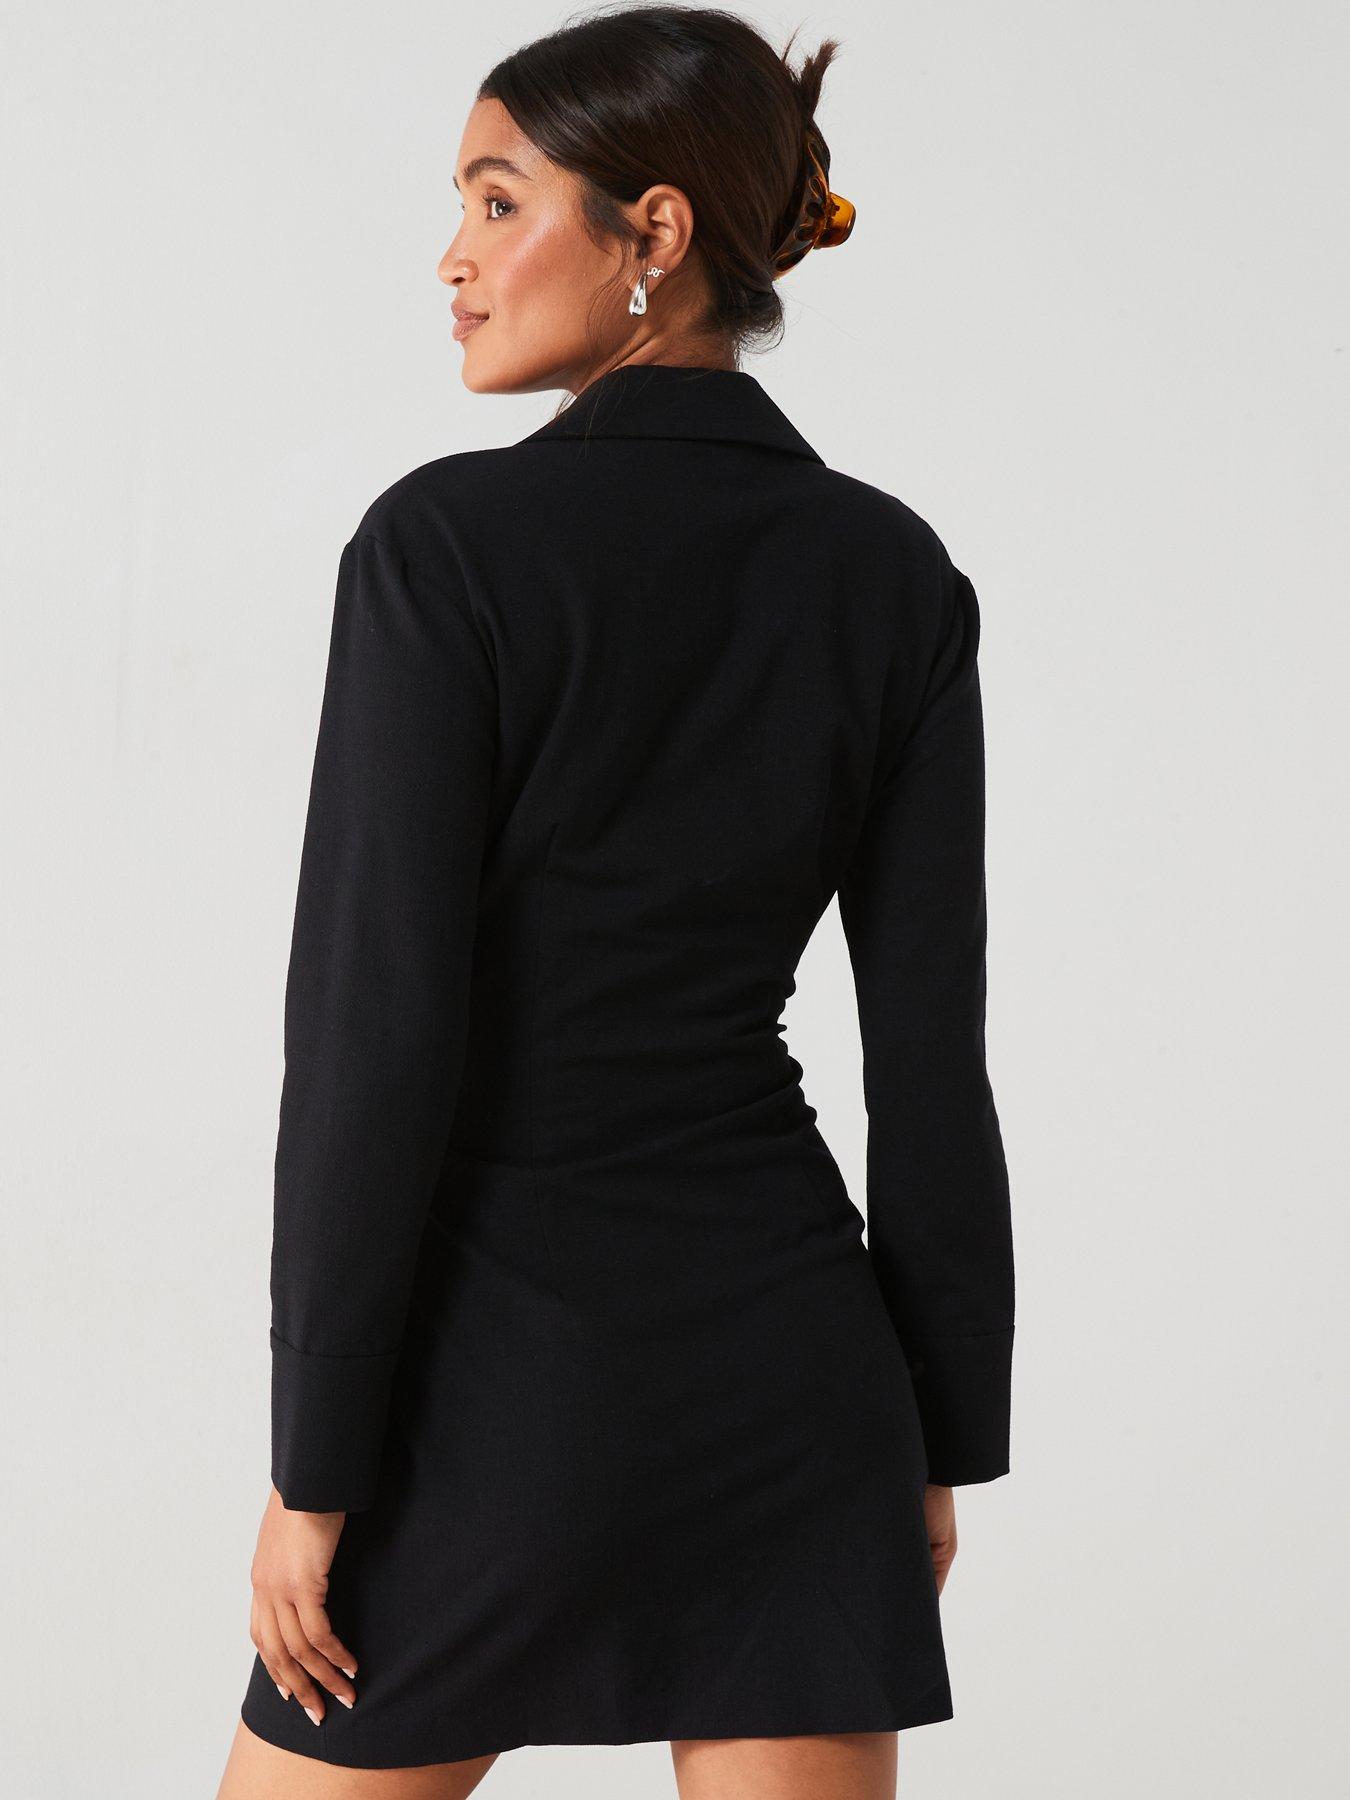 Mango Black Shirt Collar Knot Front Mini Dress | Very.co.uk